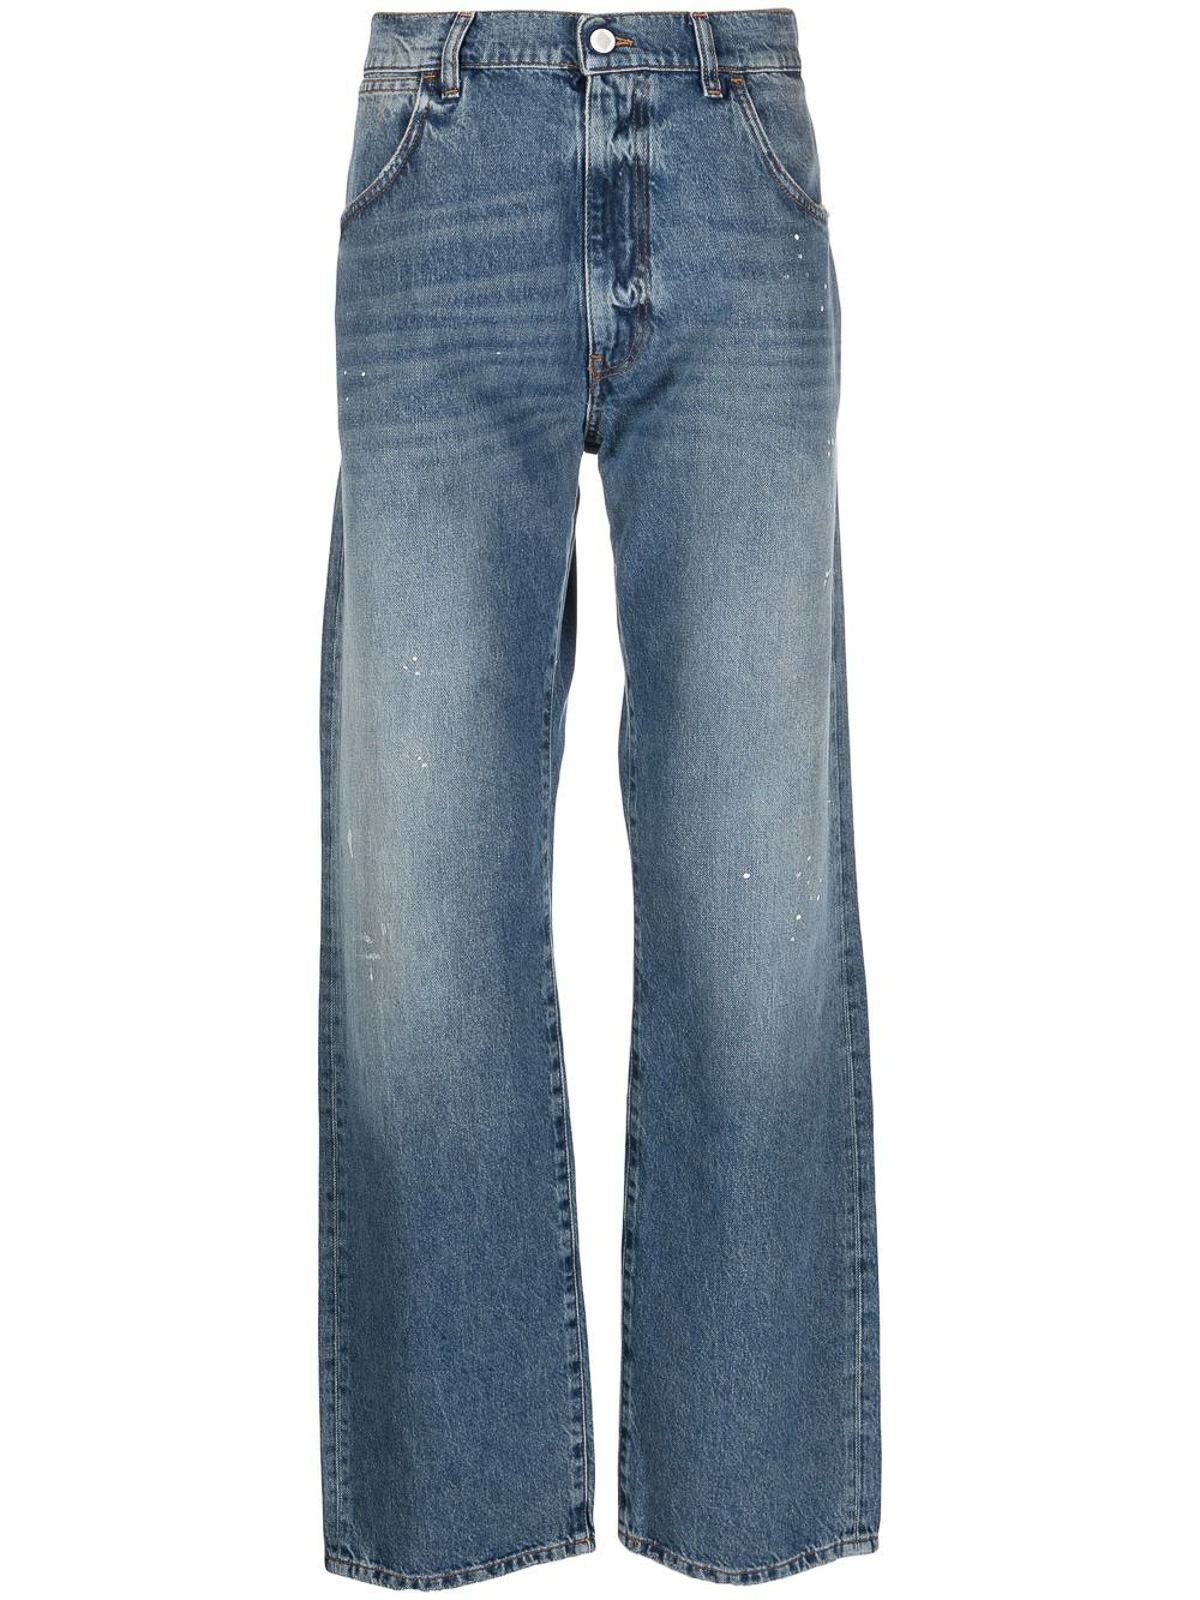 Straight leg jeans Amish - James jeans - P23AMU010D4862159999 | iKRIX.com